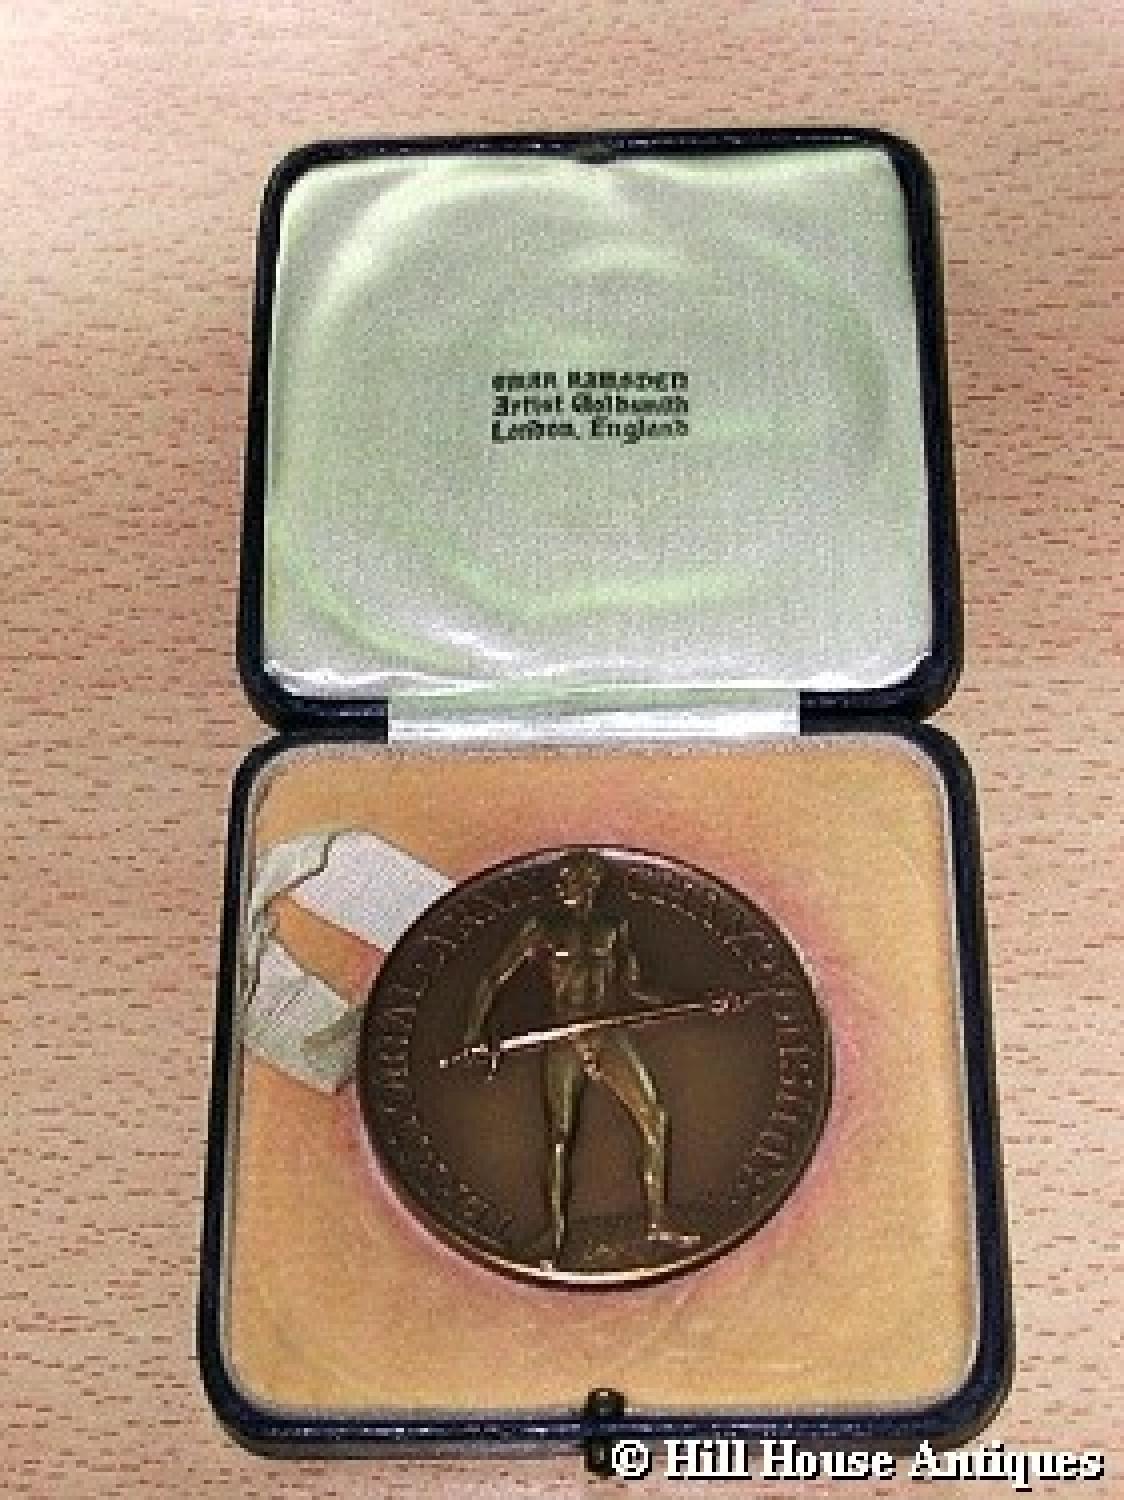 Omar Ramsden medal